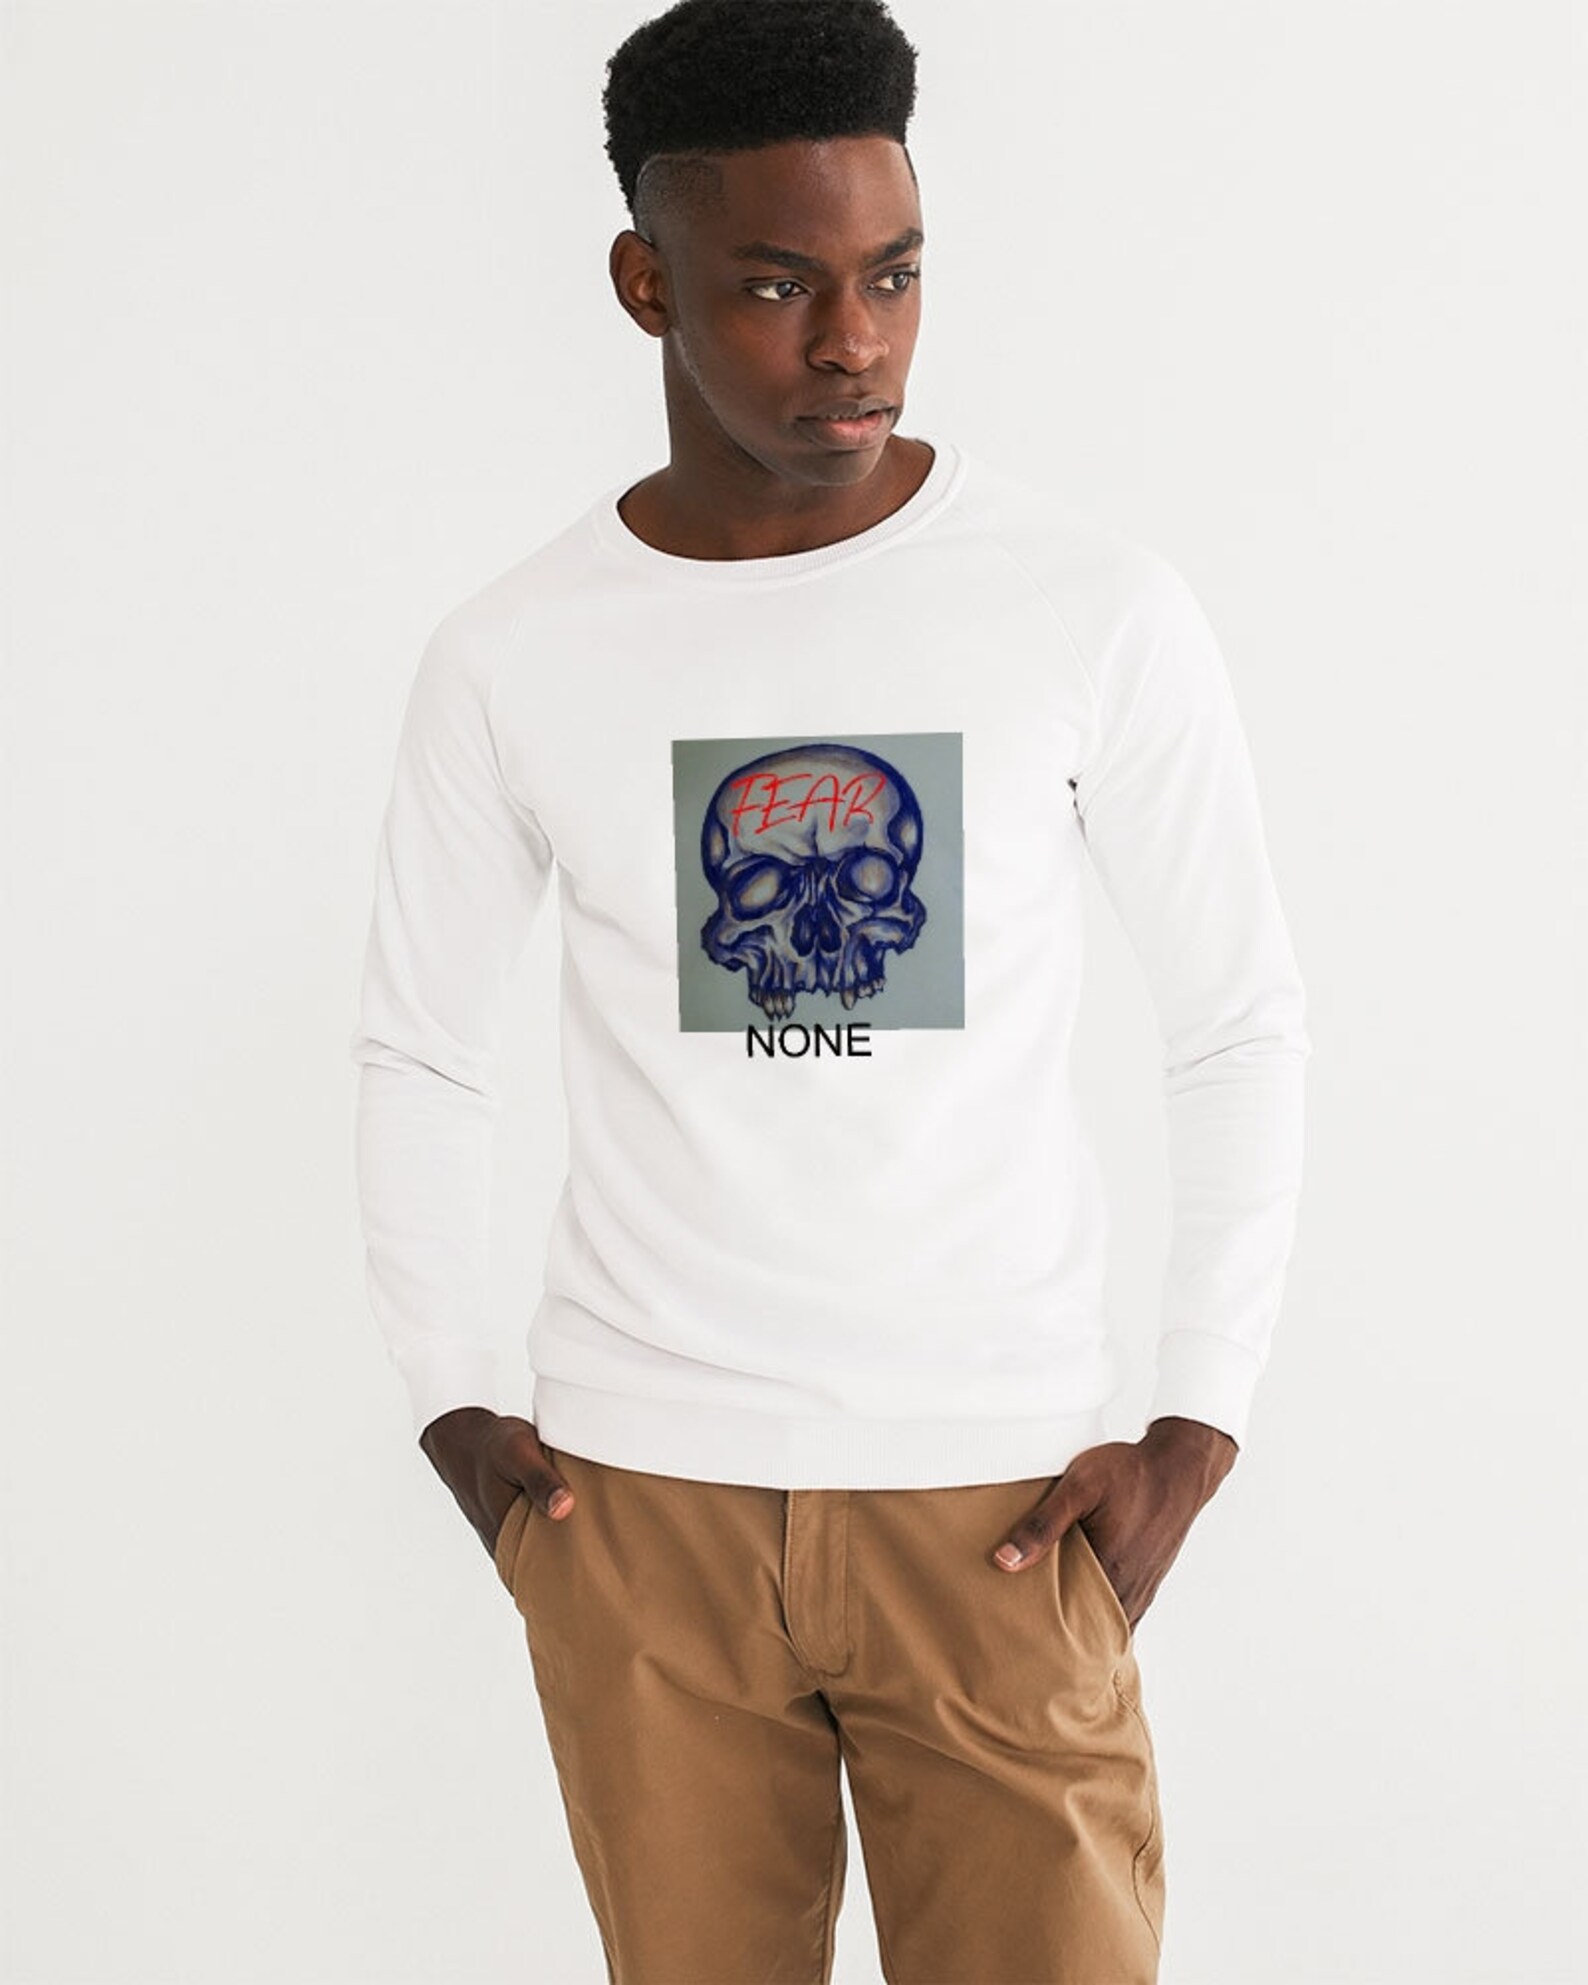 Men's Graphic sweatshirt sweatshirt graphic sweatshirt | Etsy